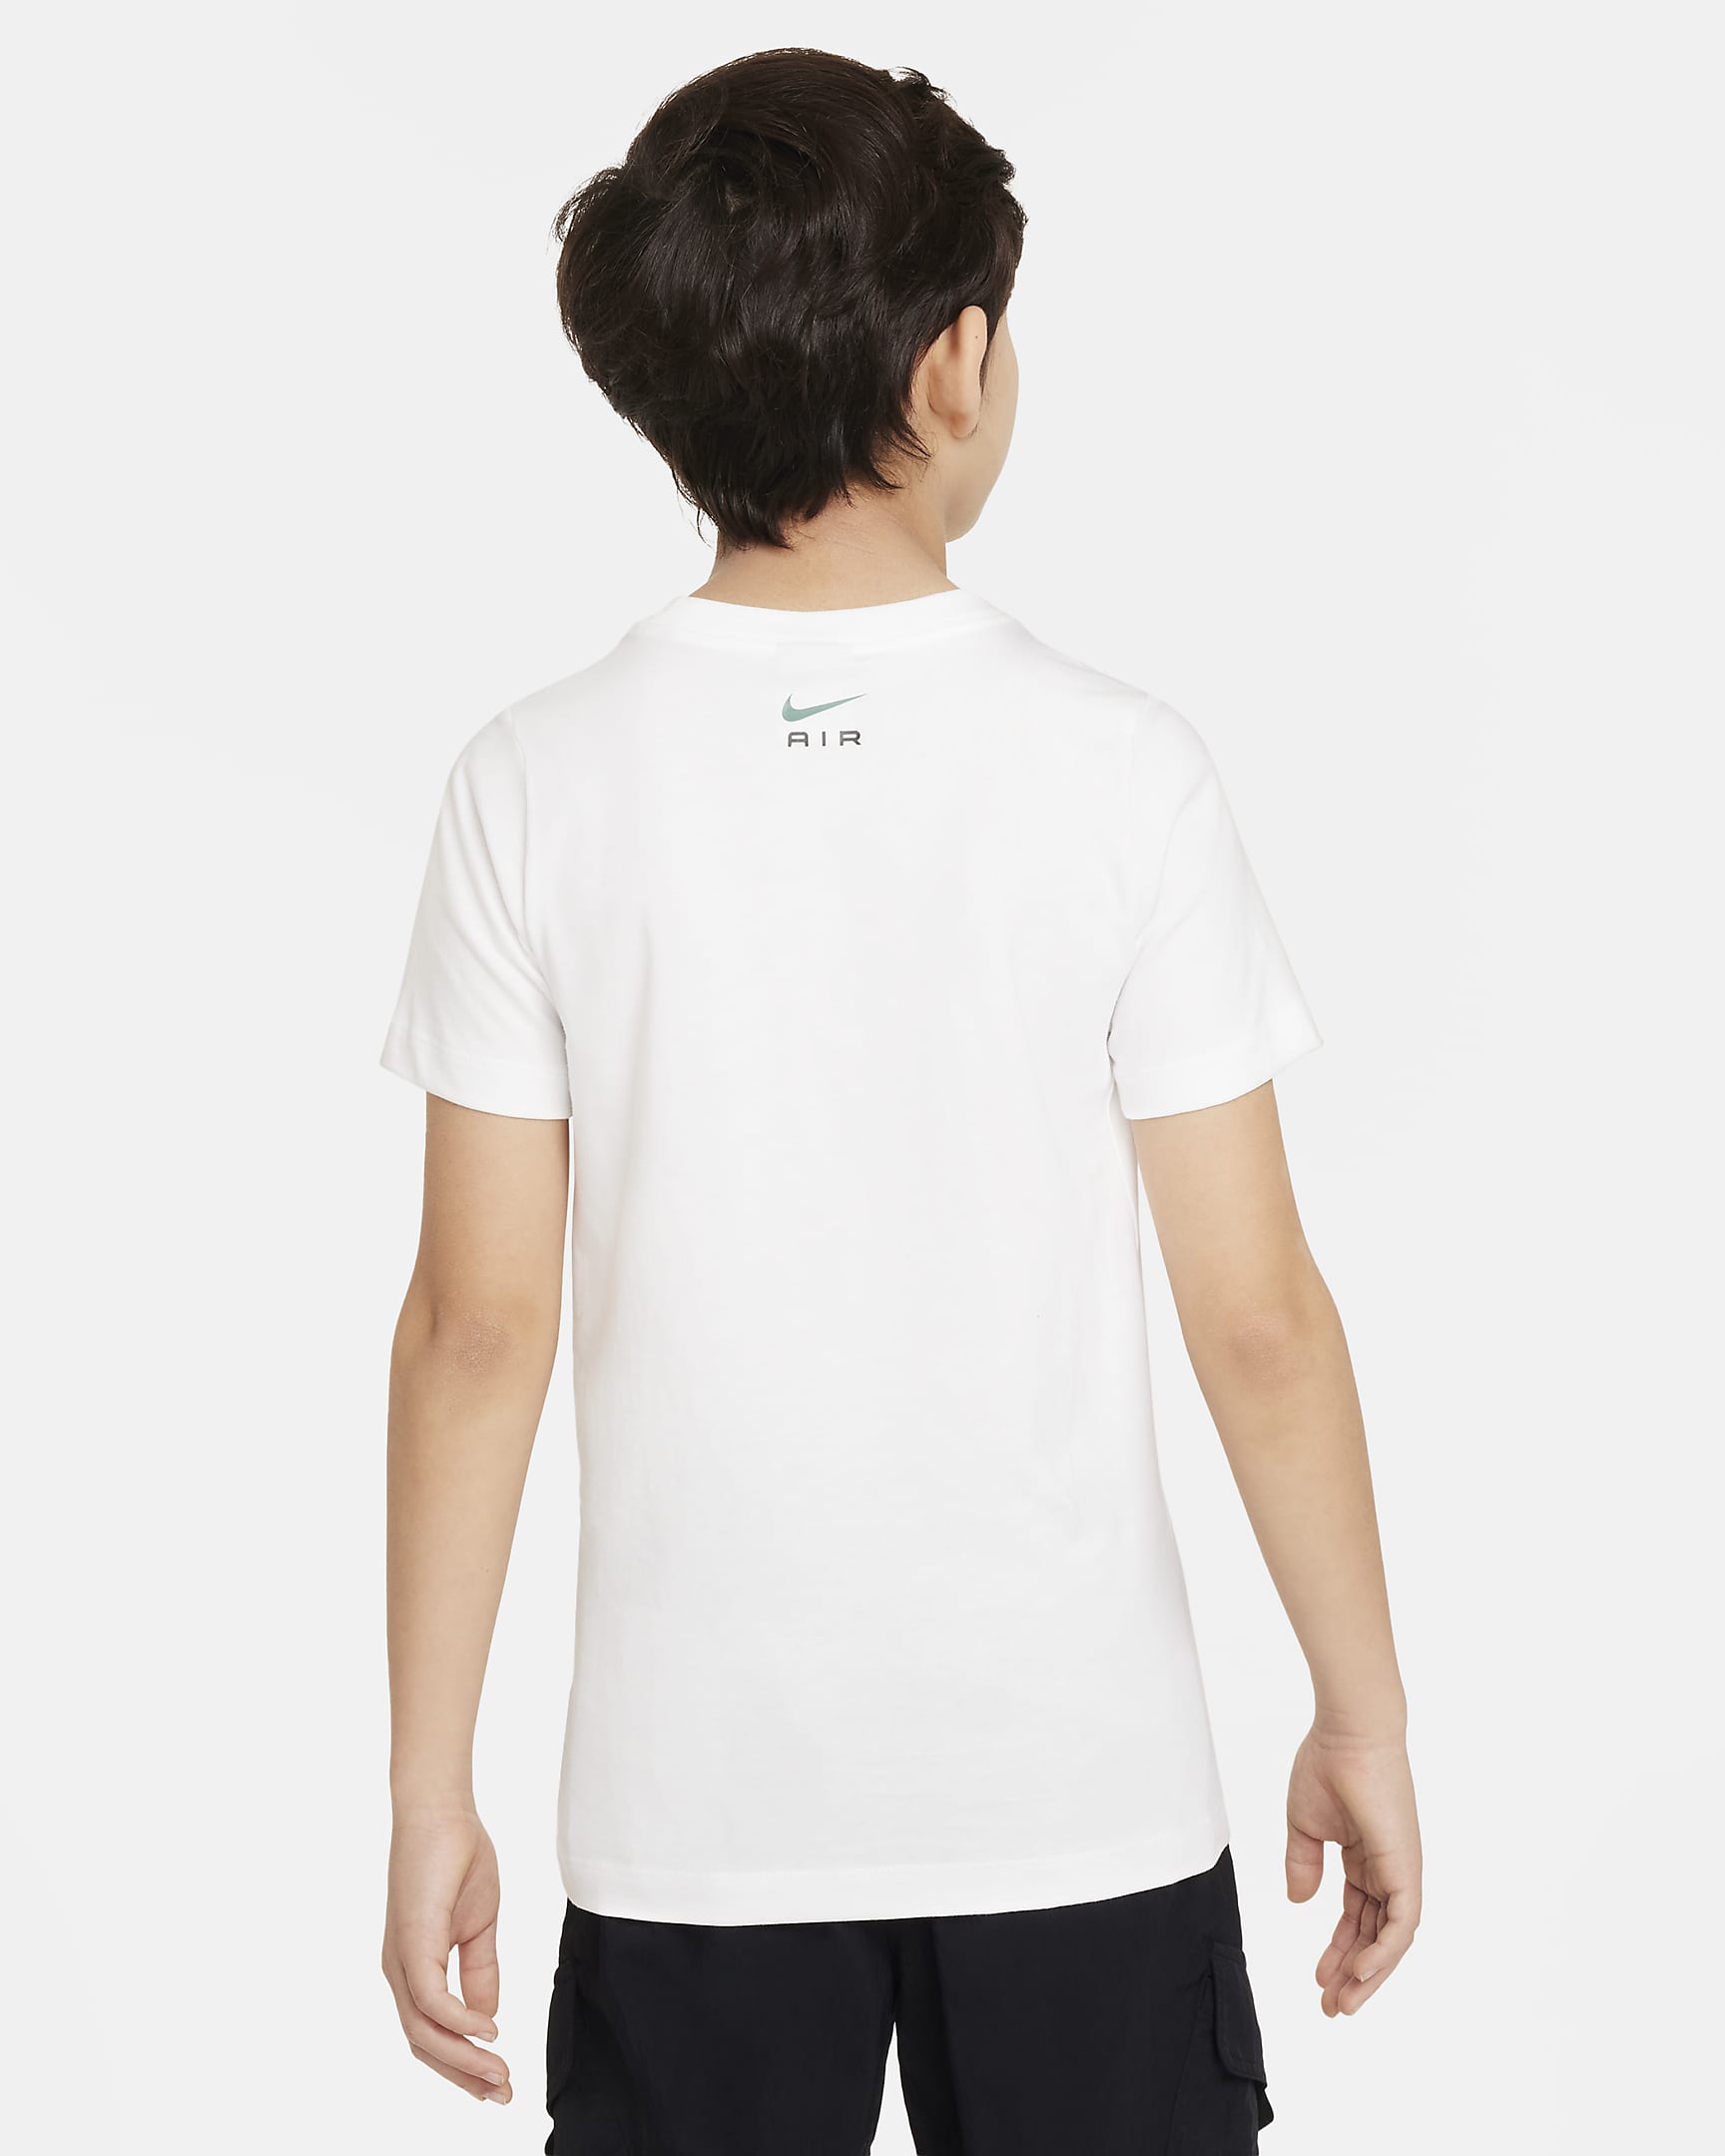 Nike Air Big Kids' (Boys') T-Shirt - White/Black